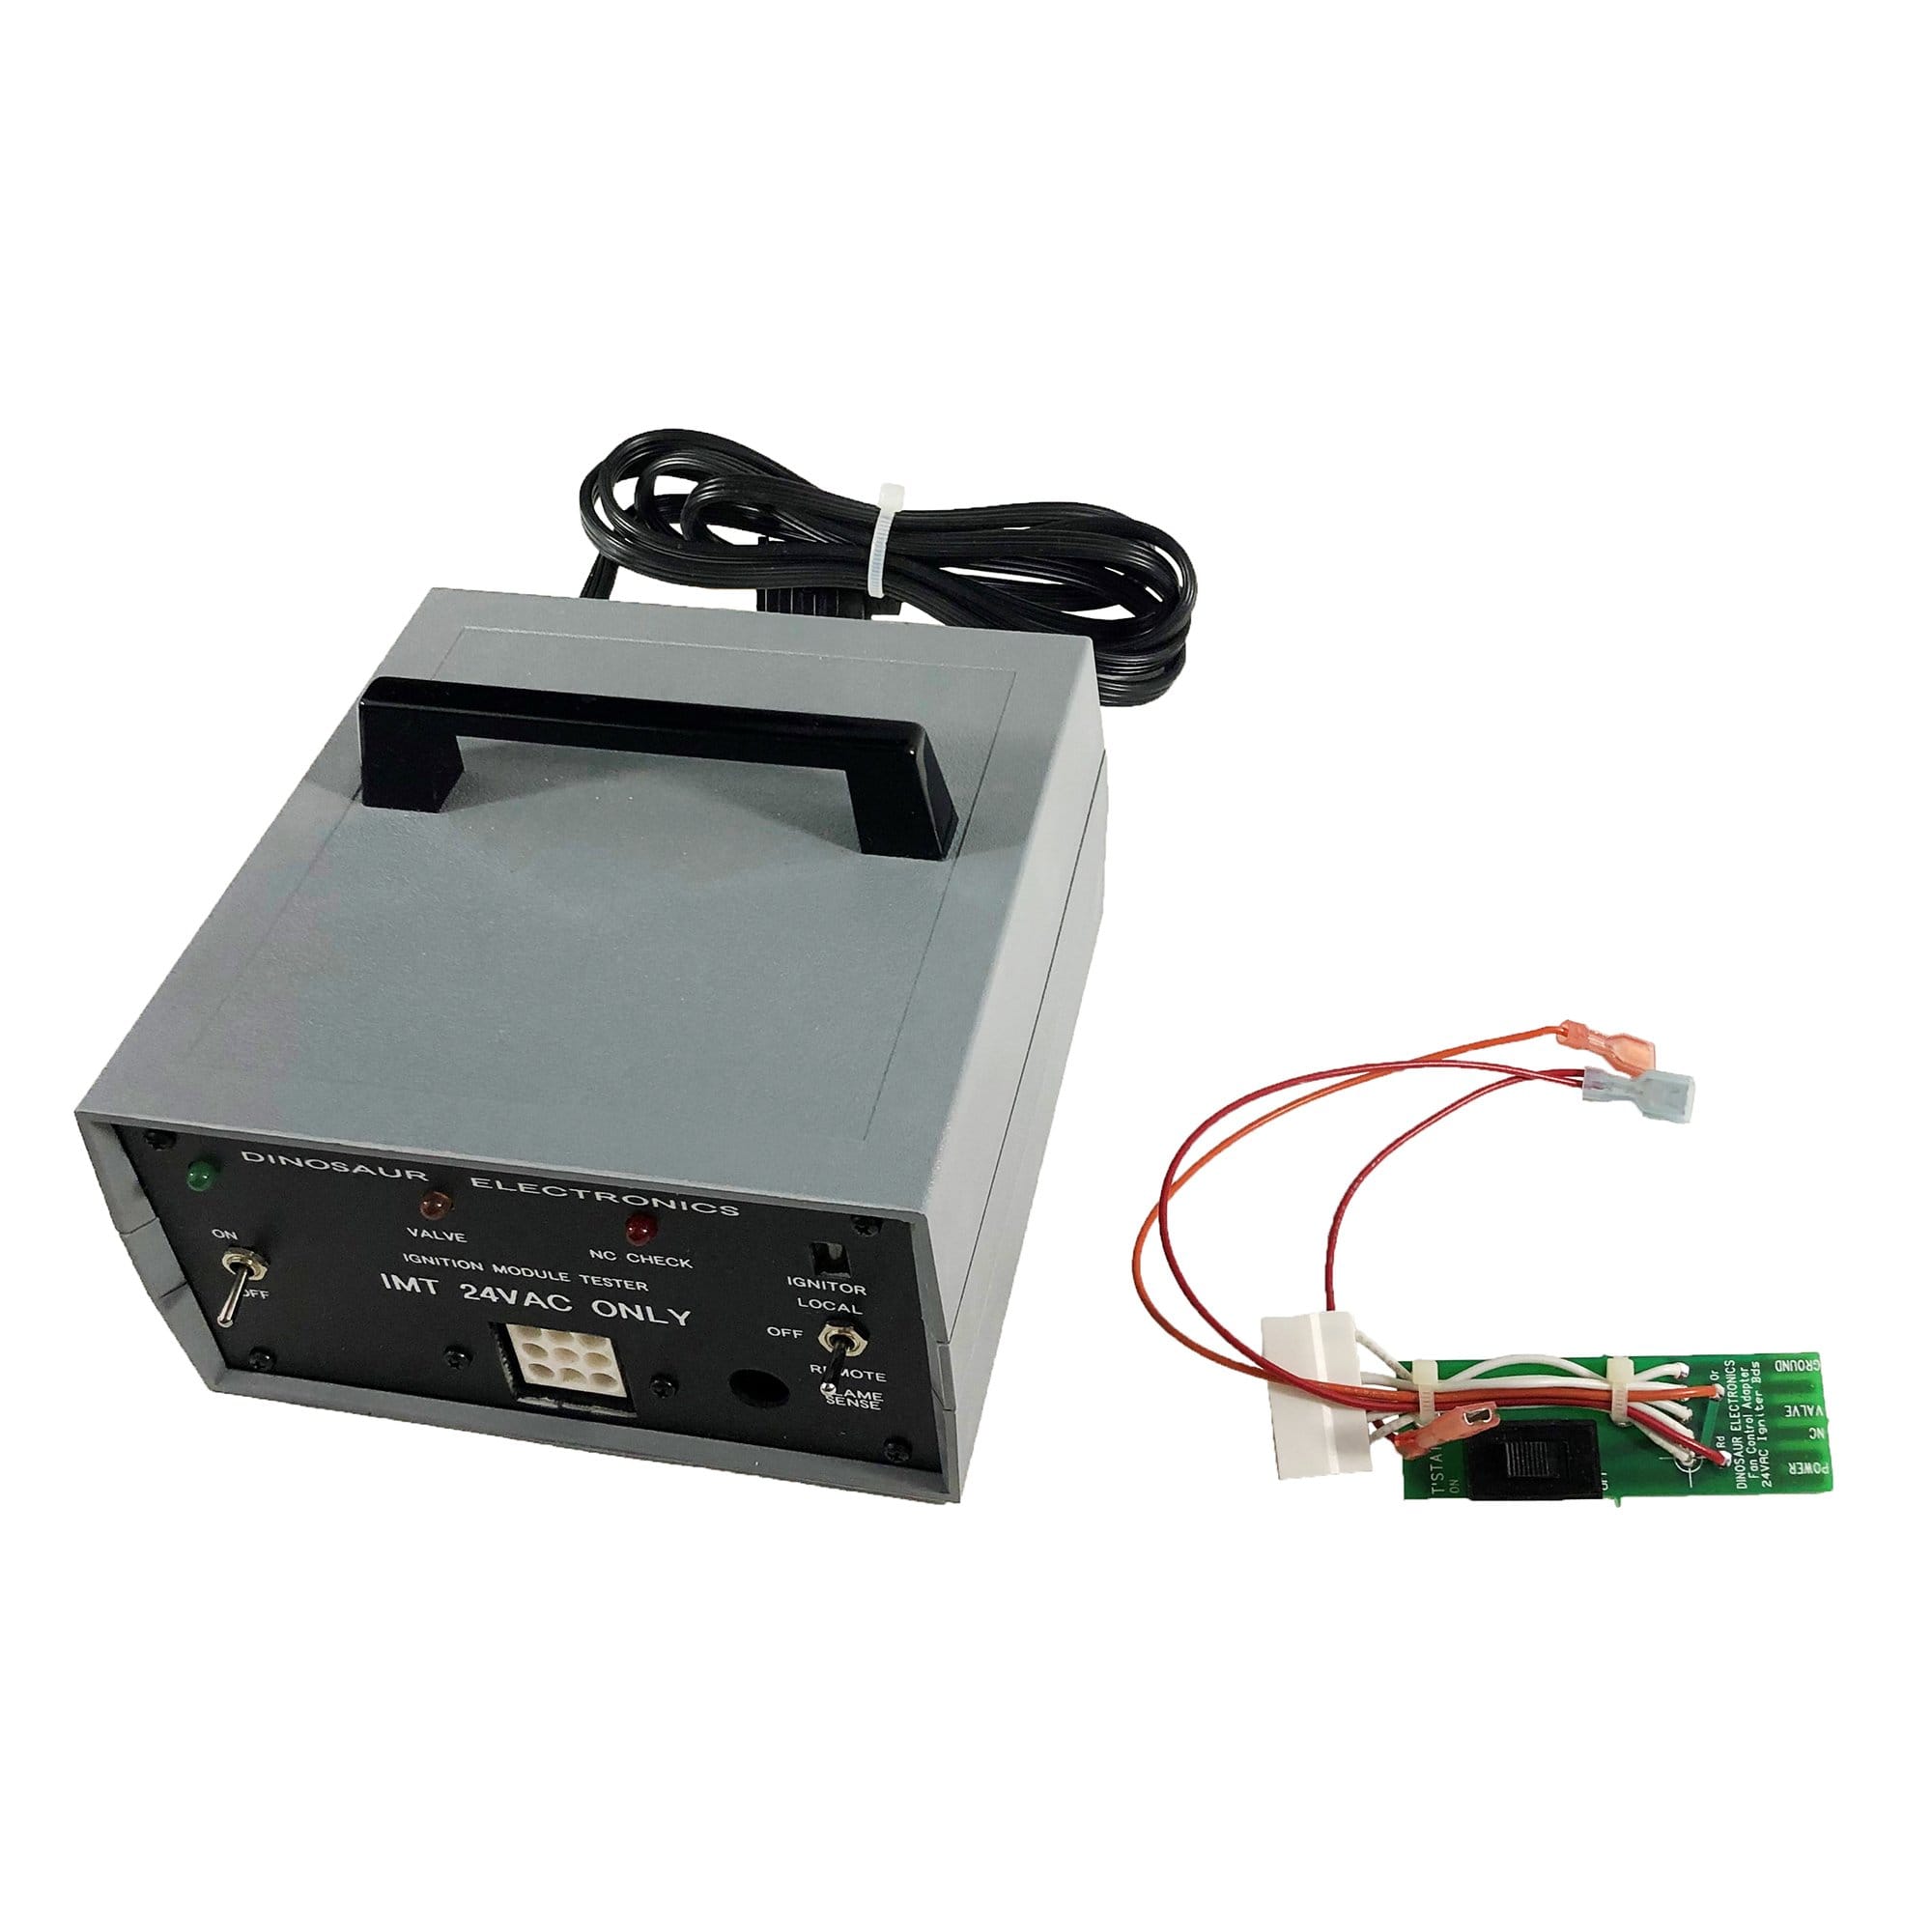 Dinosaur Electronics IMT 24 VAC Igniter Board Tester